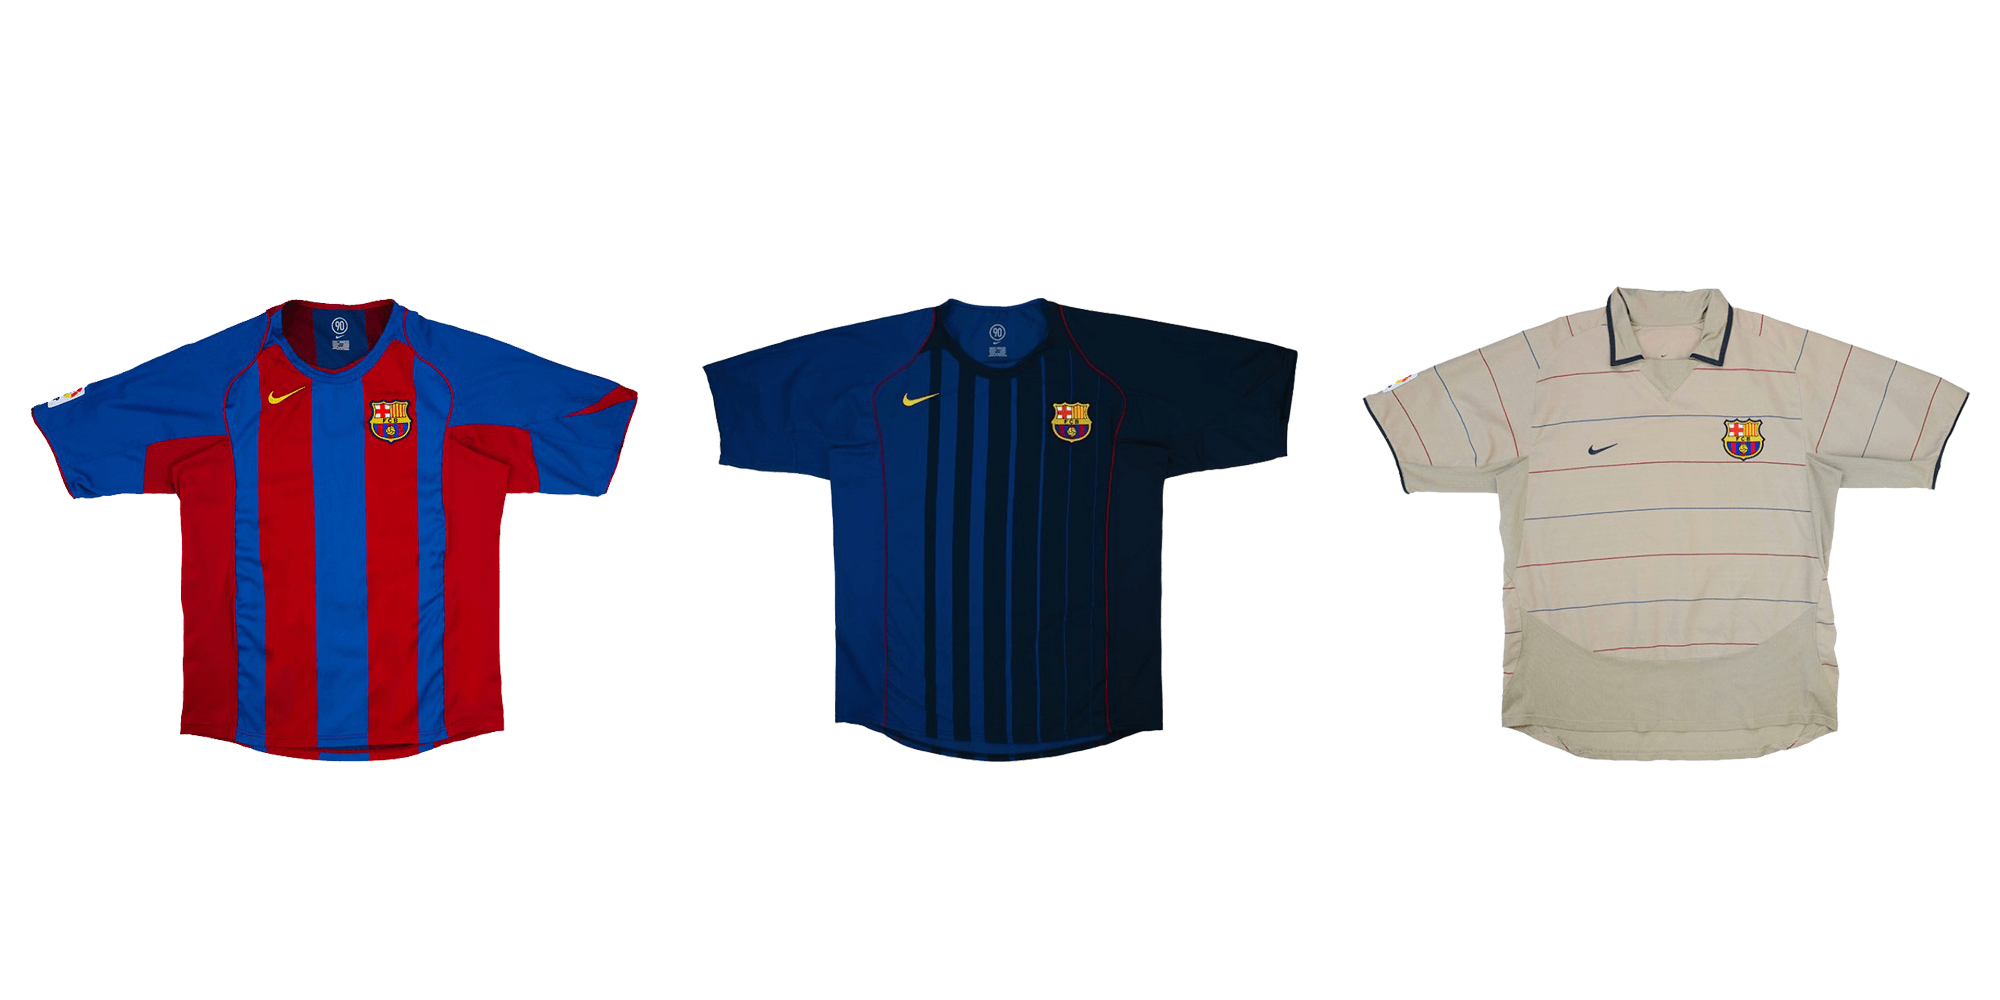 2003-2005 Newcastle United FC Home Strip Football Shirt. *Mint* [M